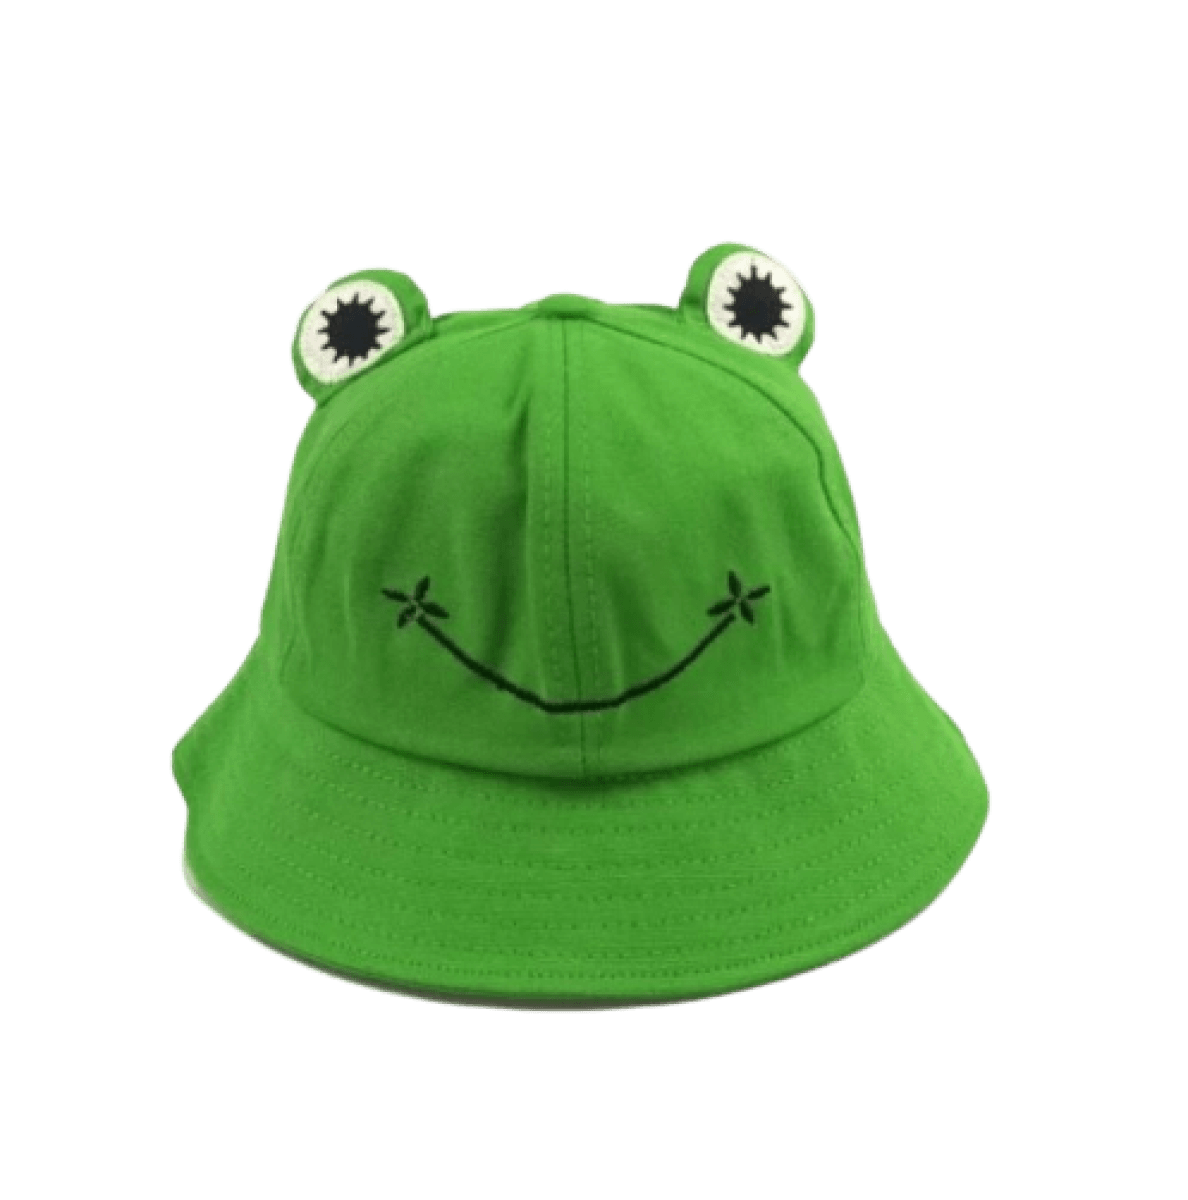 Frog Hat Floppy Female Sunhat Drawstring Adjustable Kids Childrens Hats Large Green Clothing